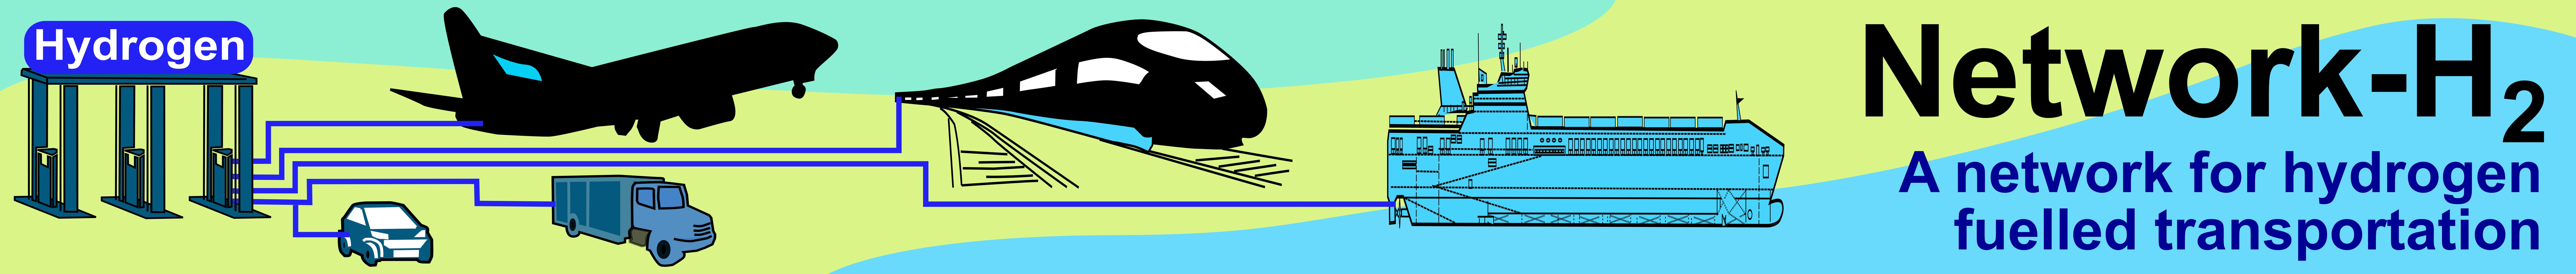 THydrogen for Transportation image of train plane cars